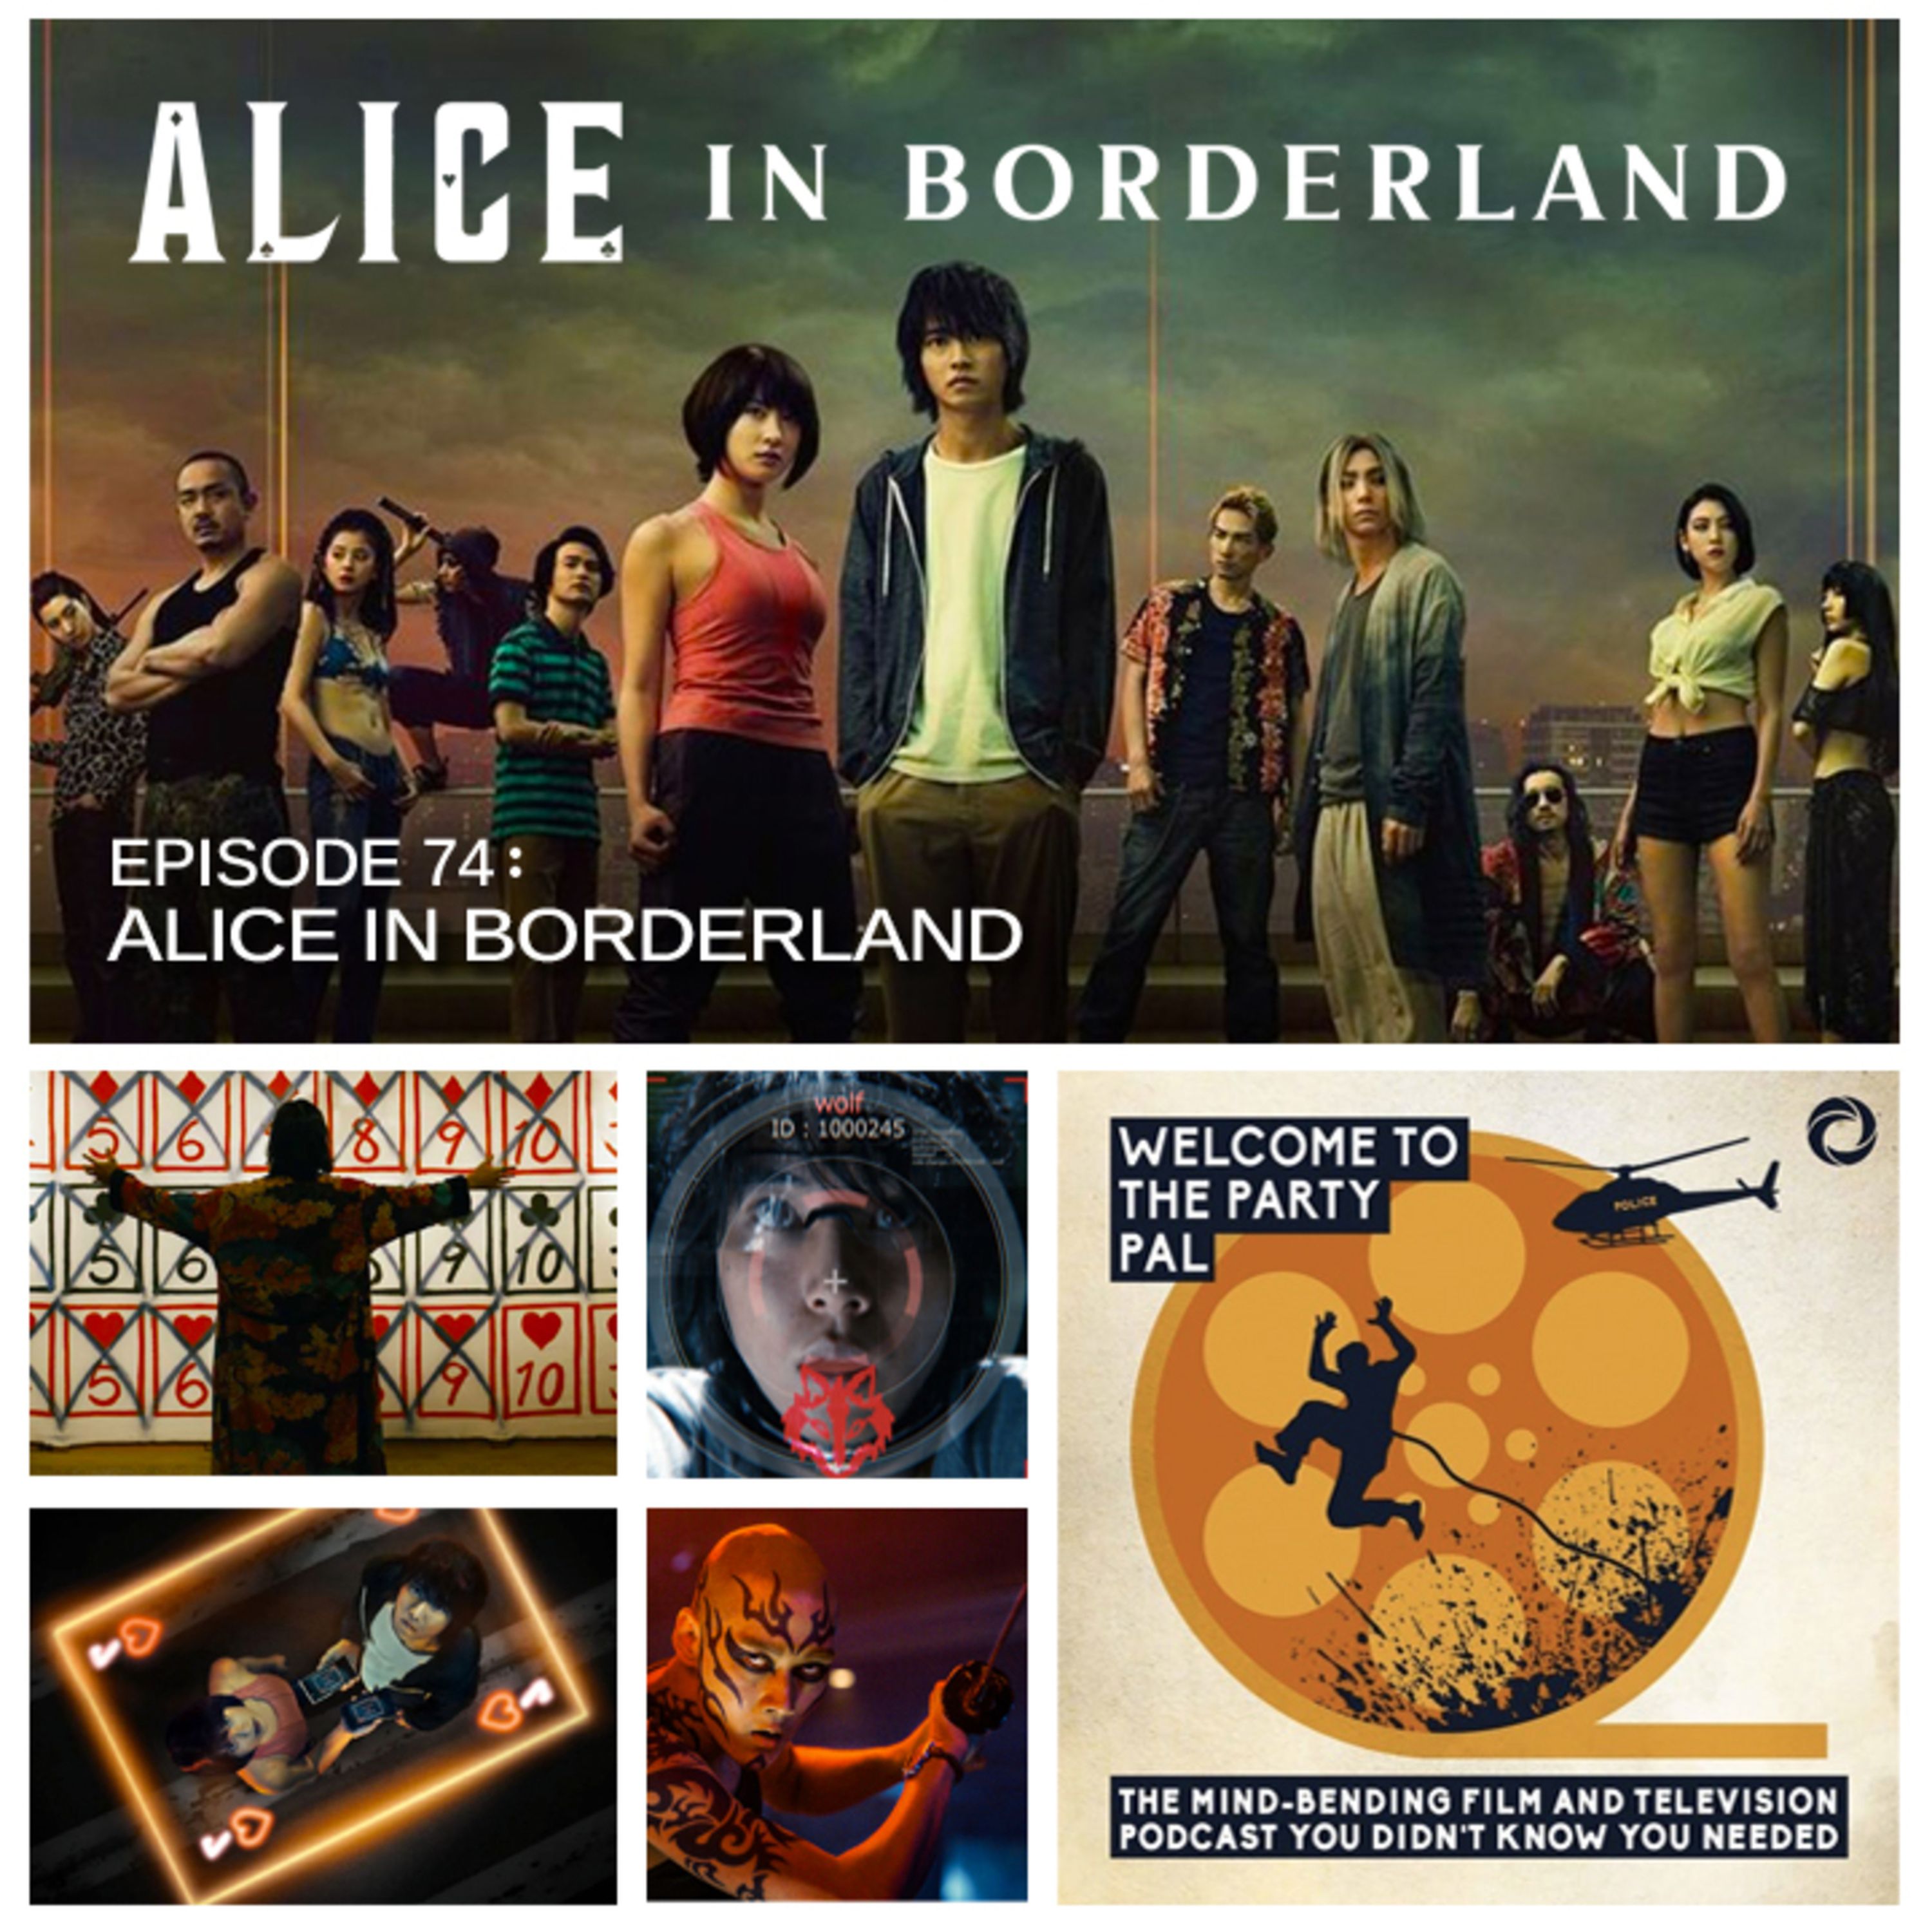 Episode 74: Alice In Borderland